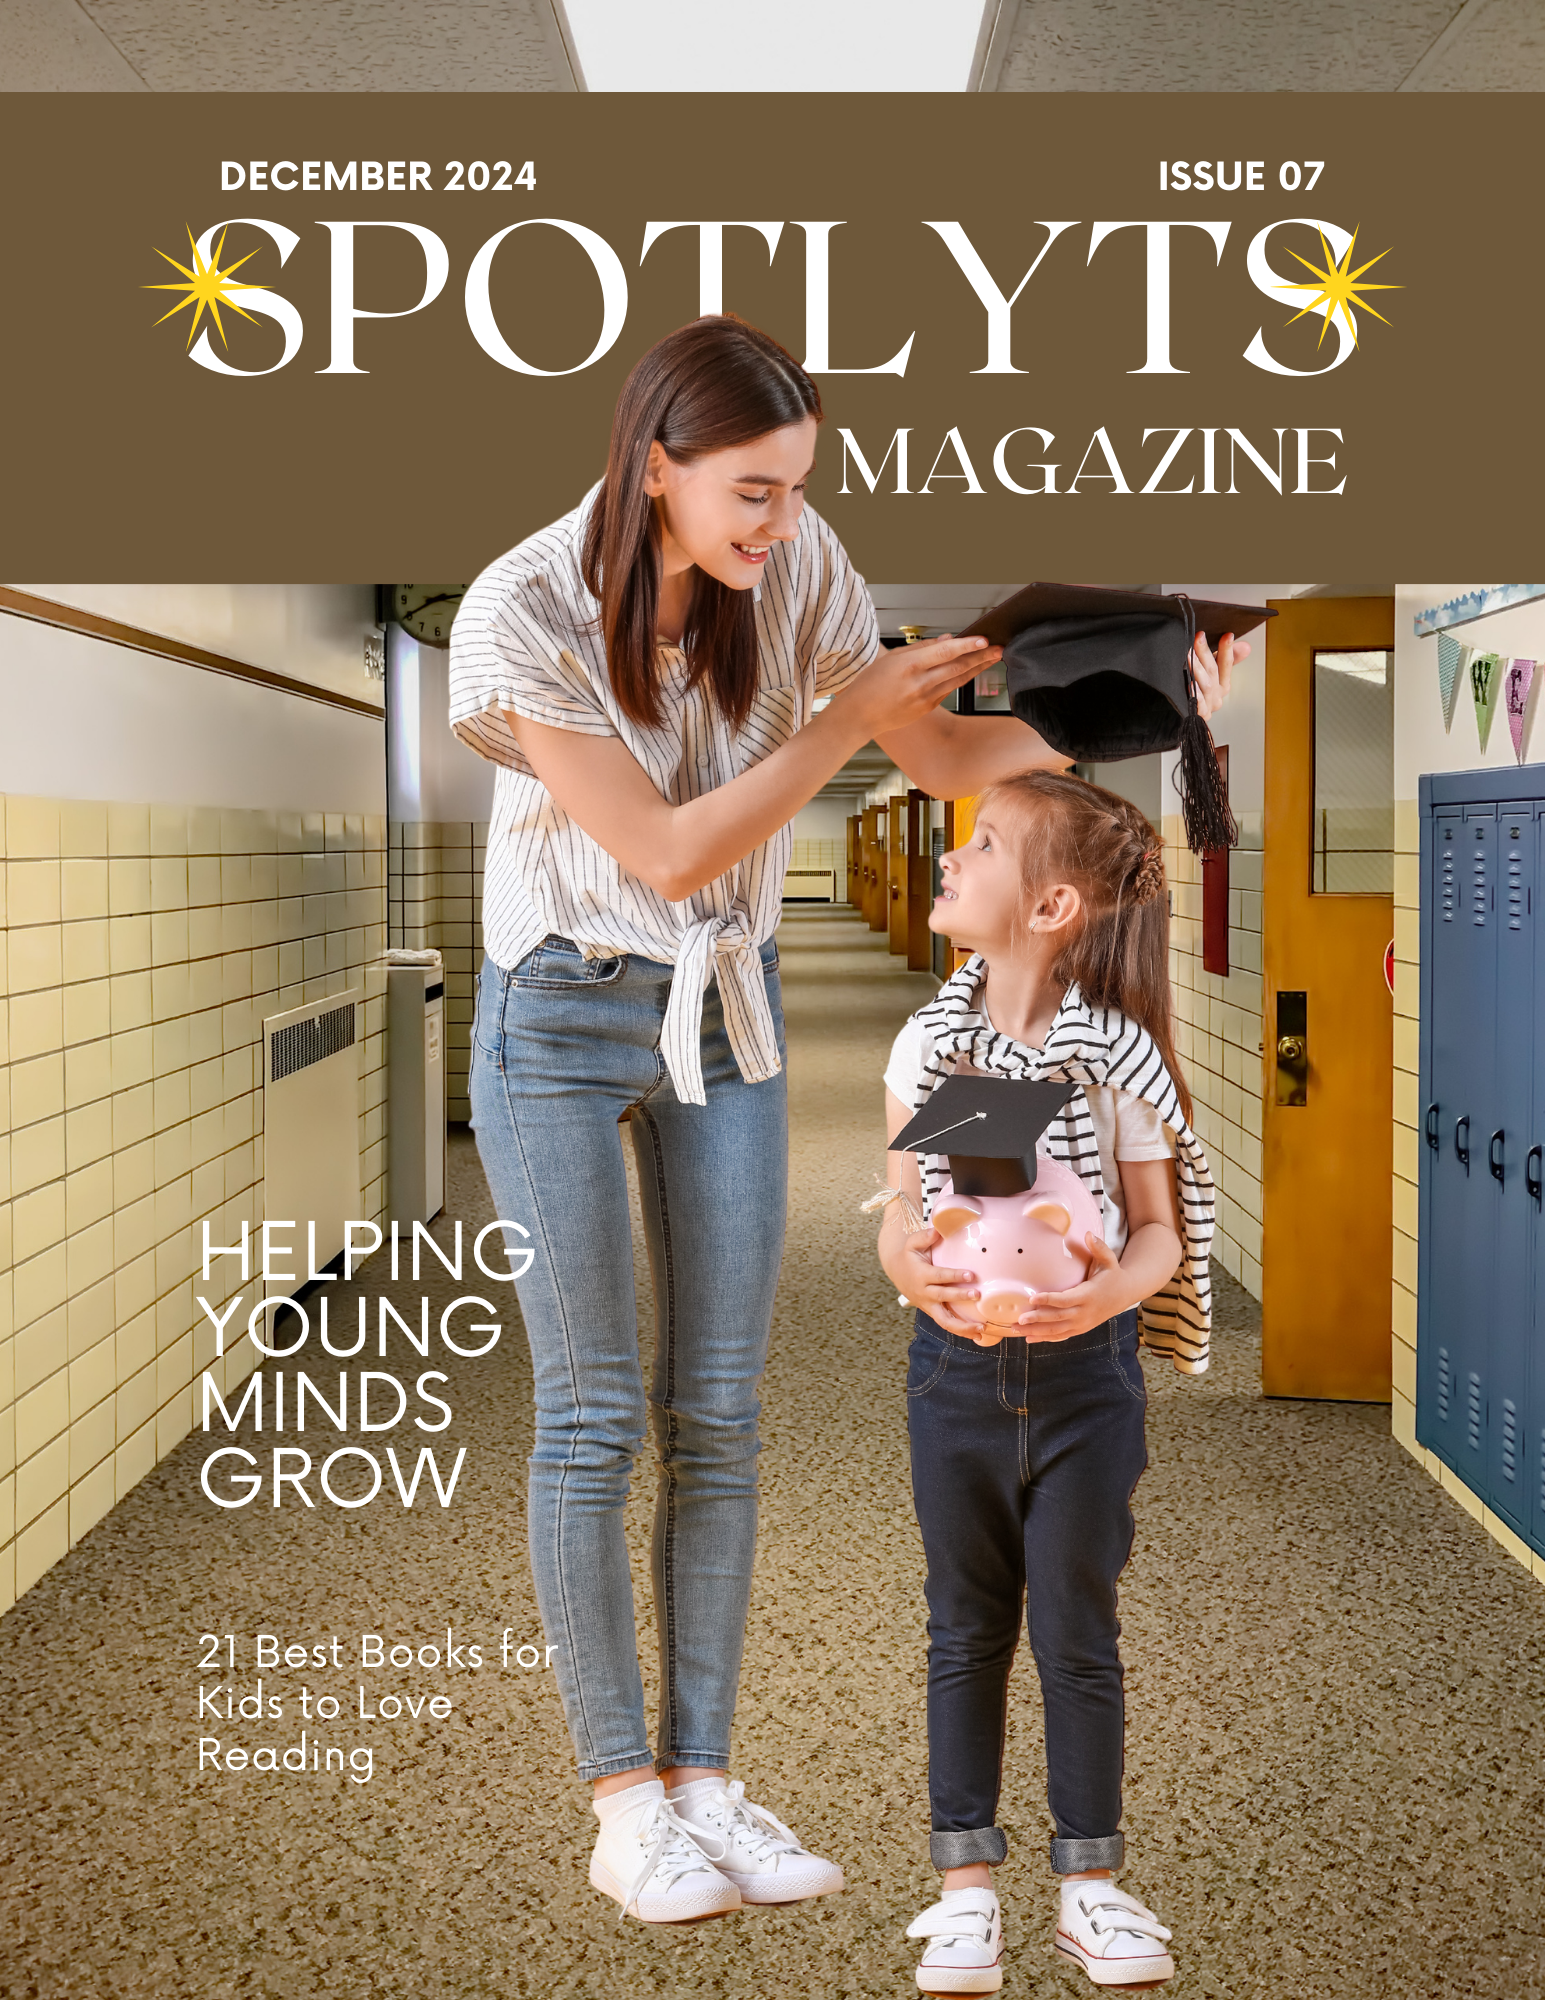 Spotlyts magazine cover